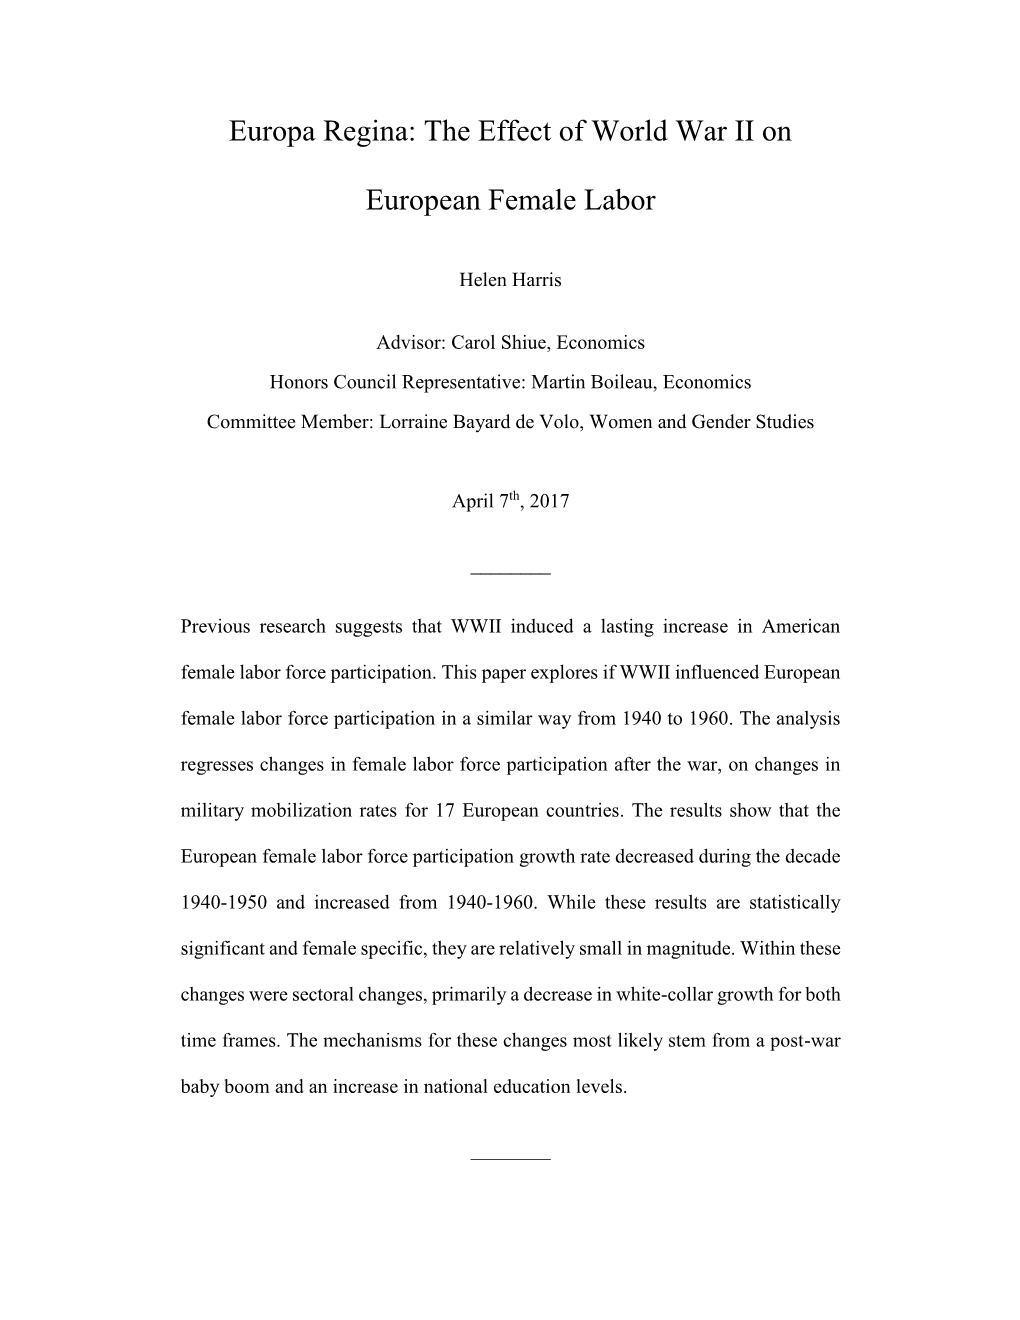 Europa Regina: the Effect of World War II on European Female Labor